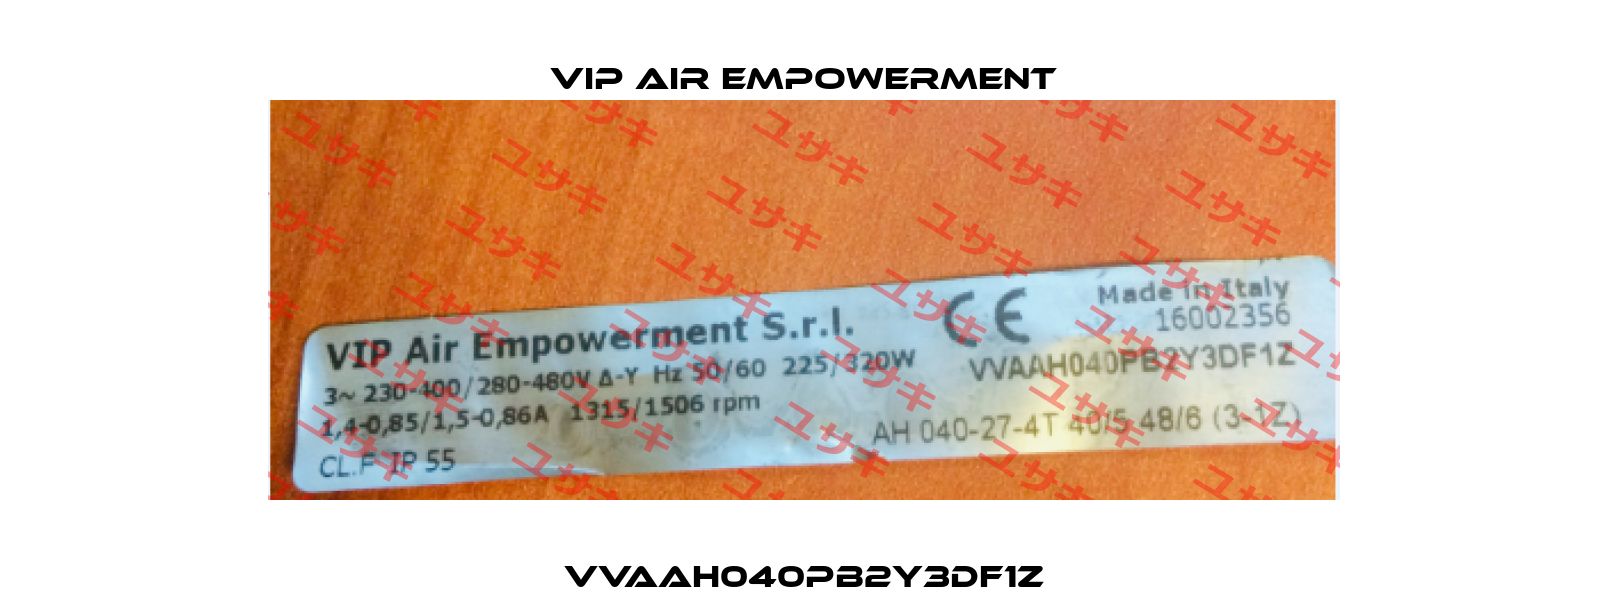 VVAAH040PB2Y3DF1Z VIP AIR EMPOWERMENT